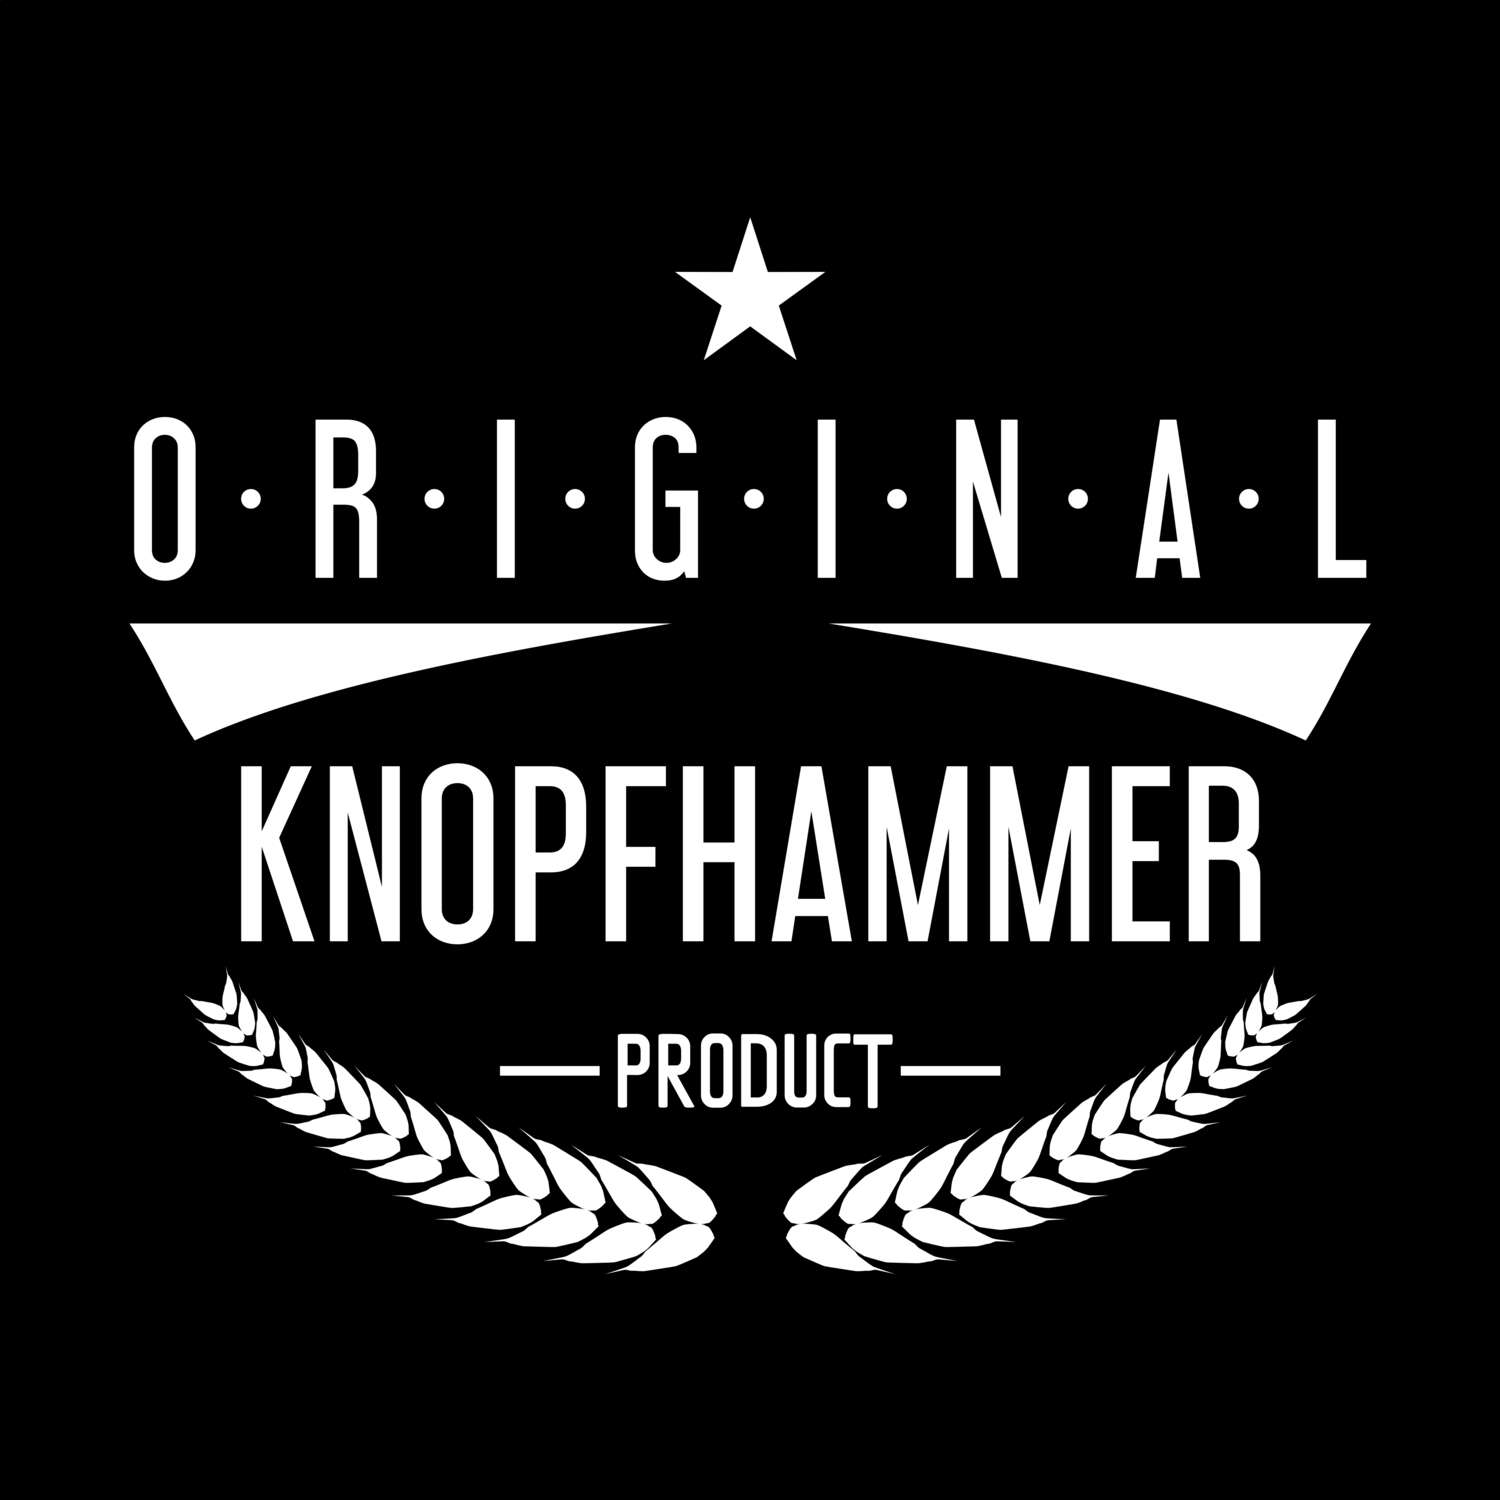 Knopfhammer T-Shirt »Original Product«